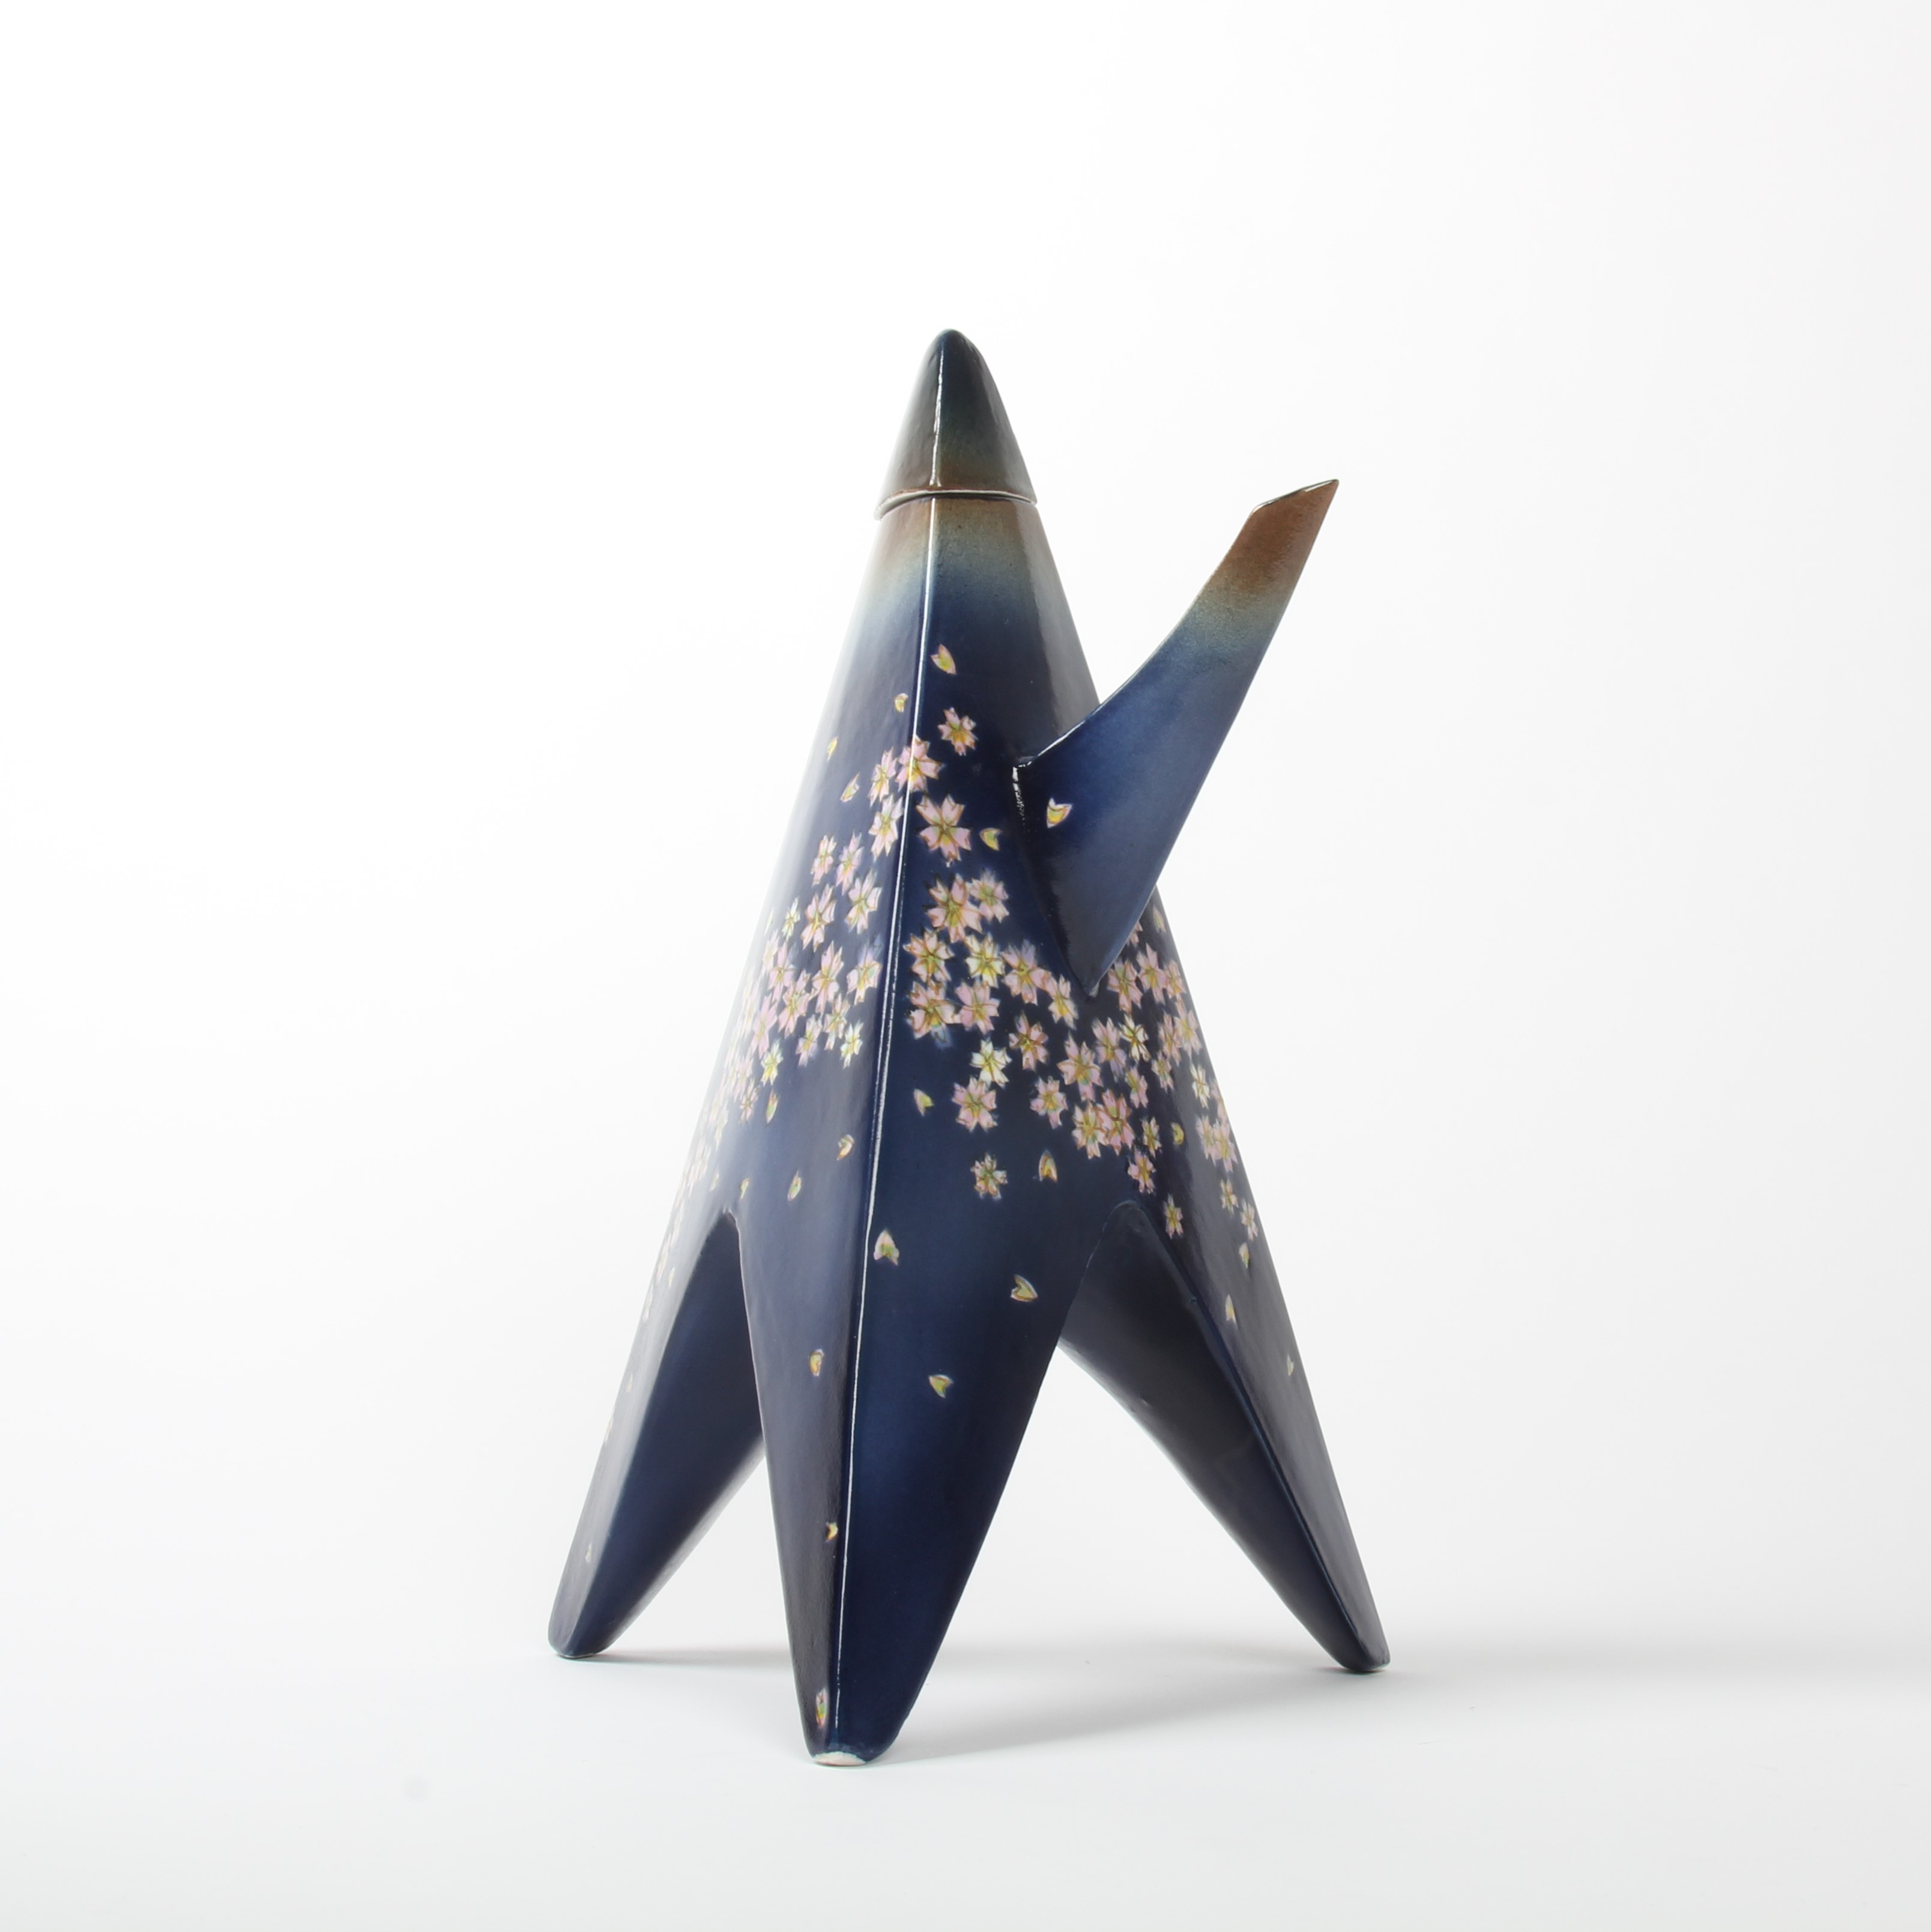 Kinichi Shigeno: Blue Floral Tripod Decanter Product Image 2 of 4